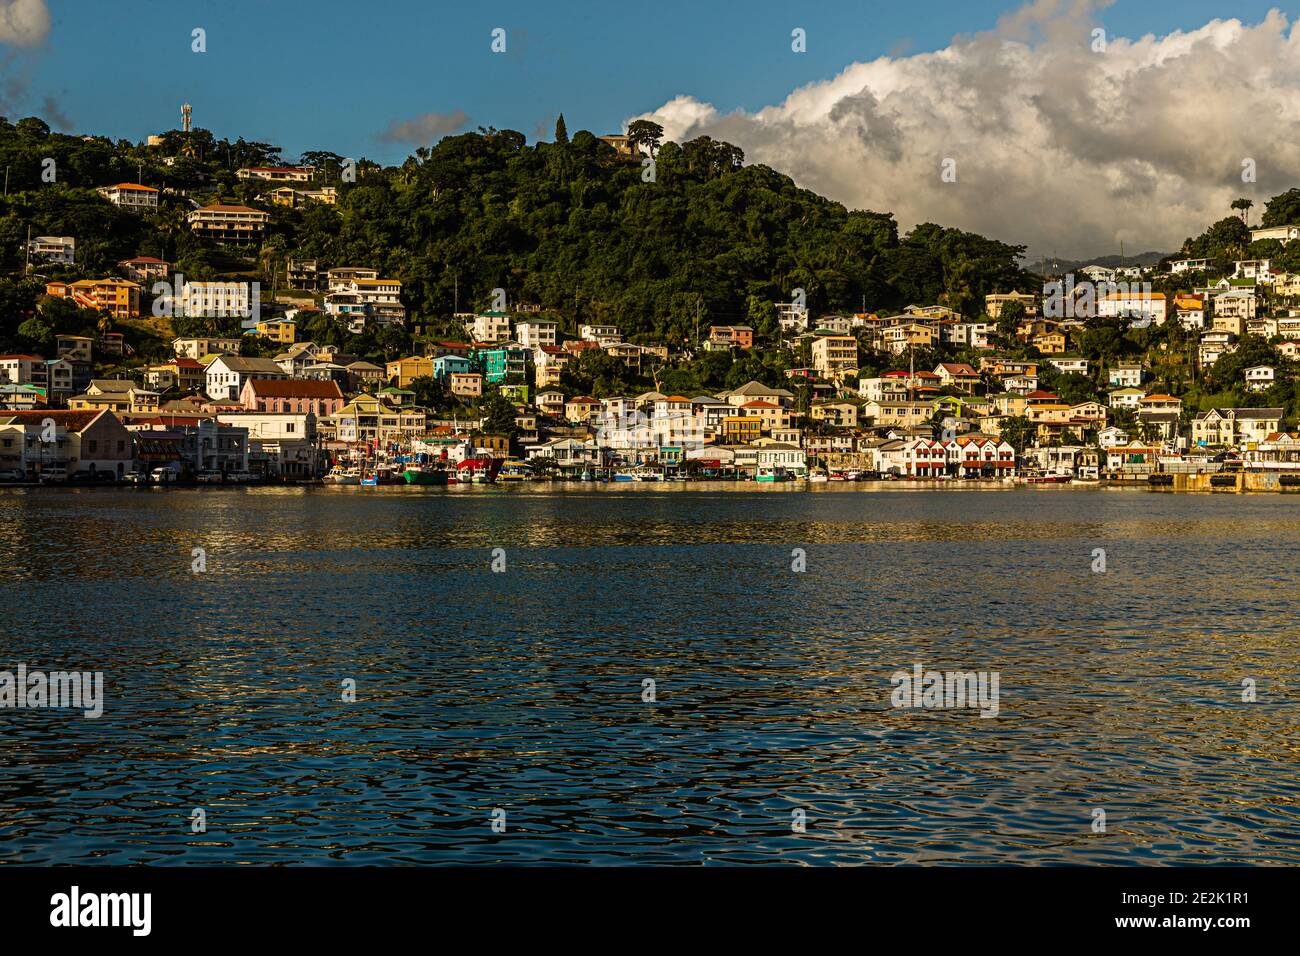 St. George’s, Capital of Grenada Stock Photo